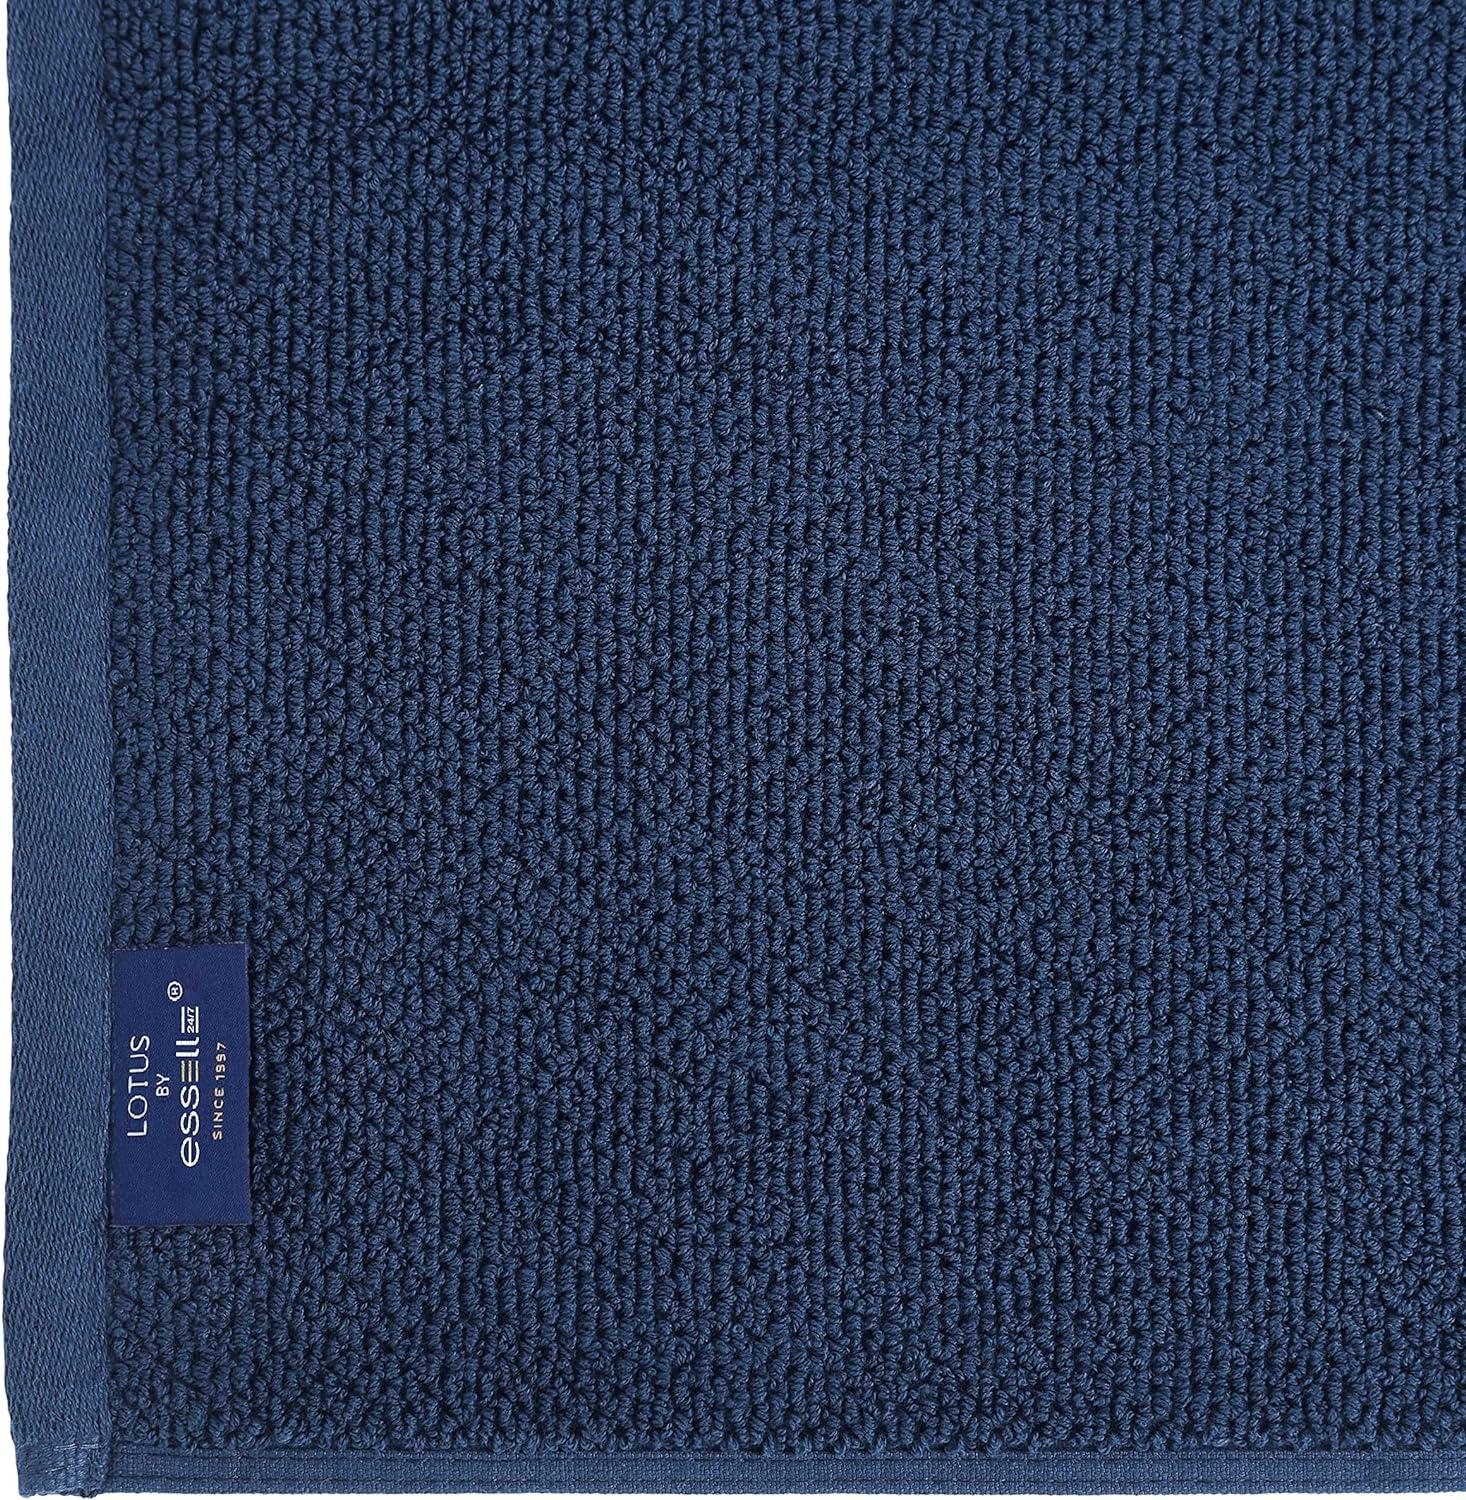 Soft Hotel Towels 6 Piece Set (Navy), Blue